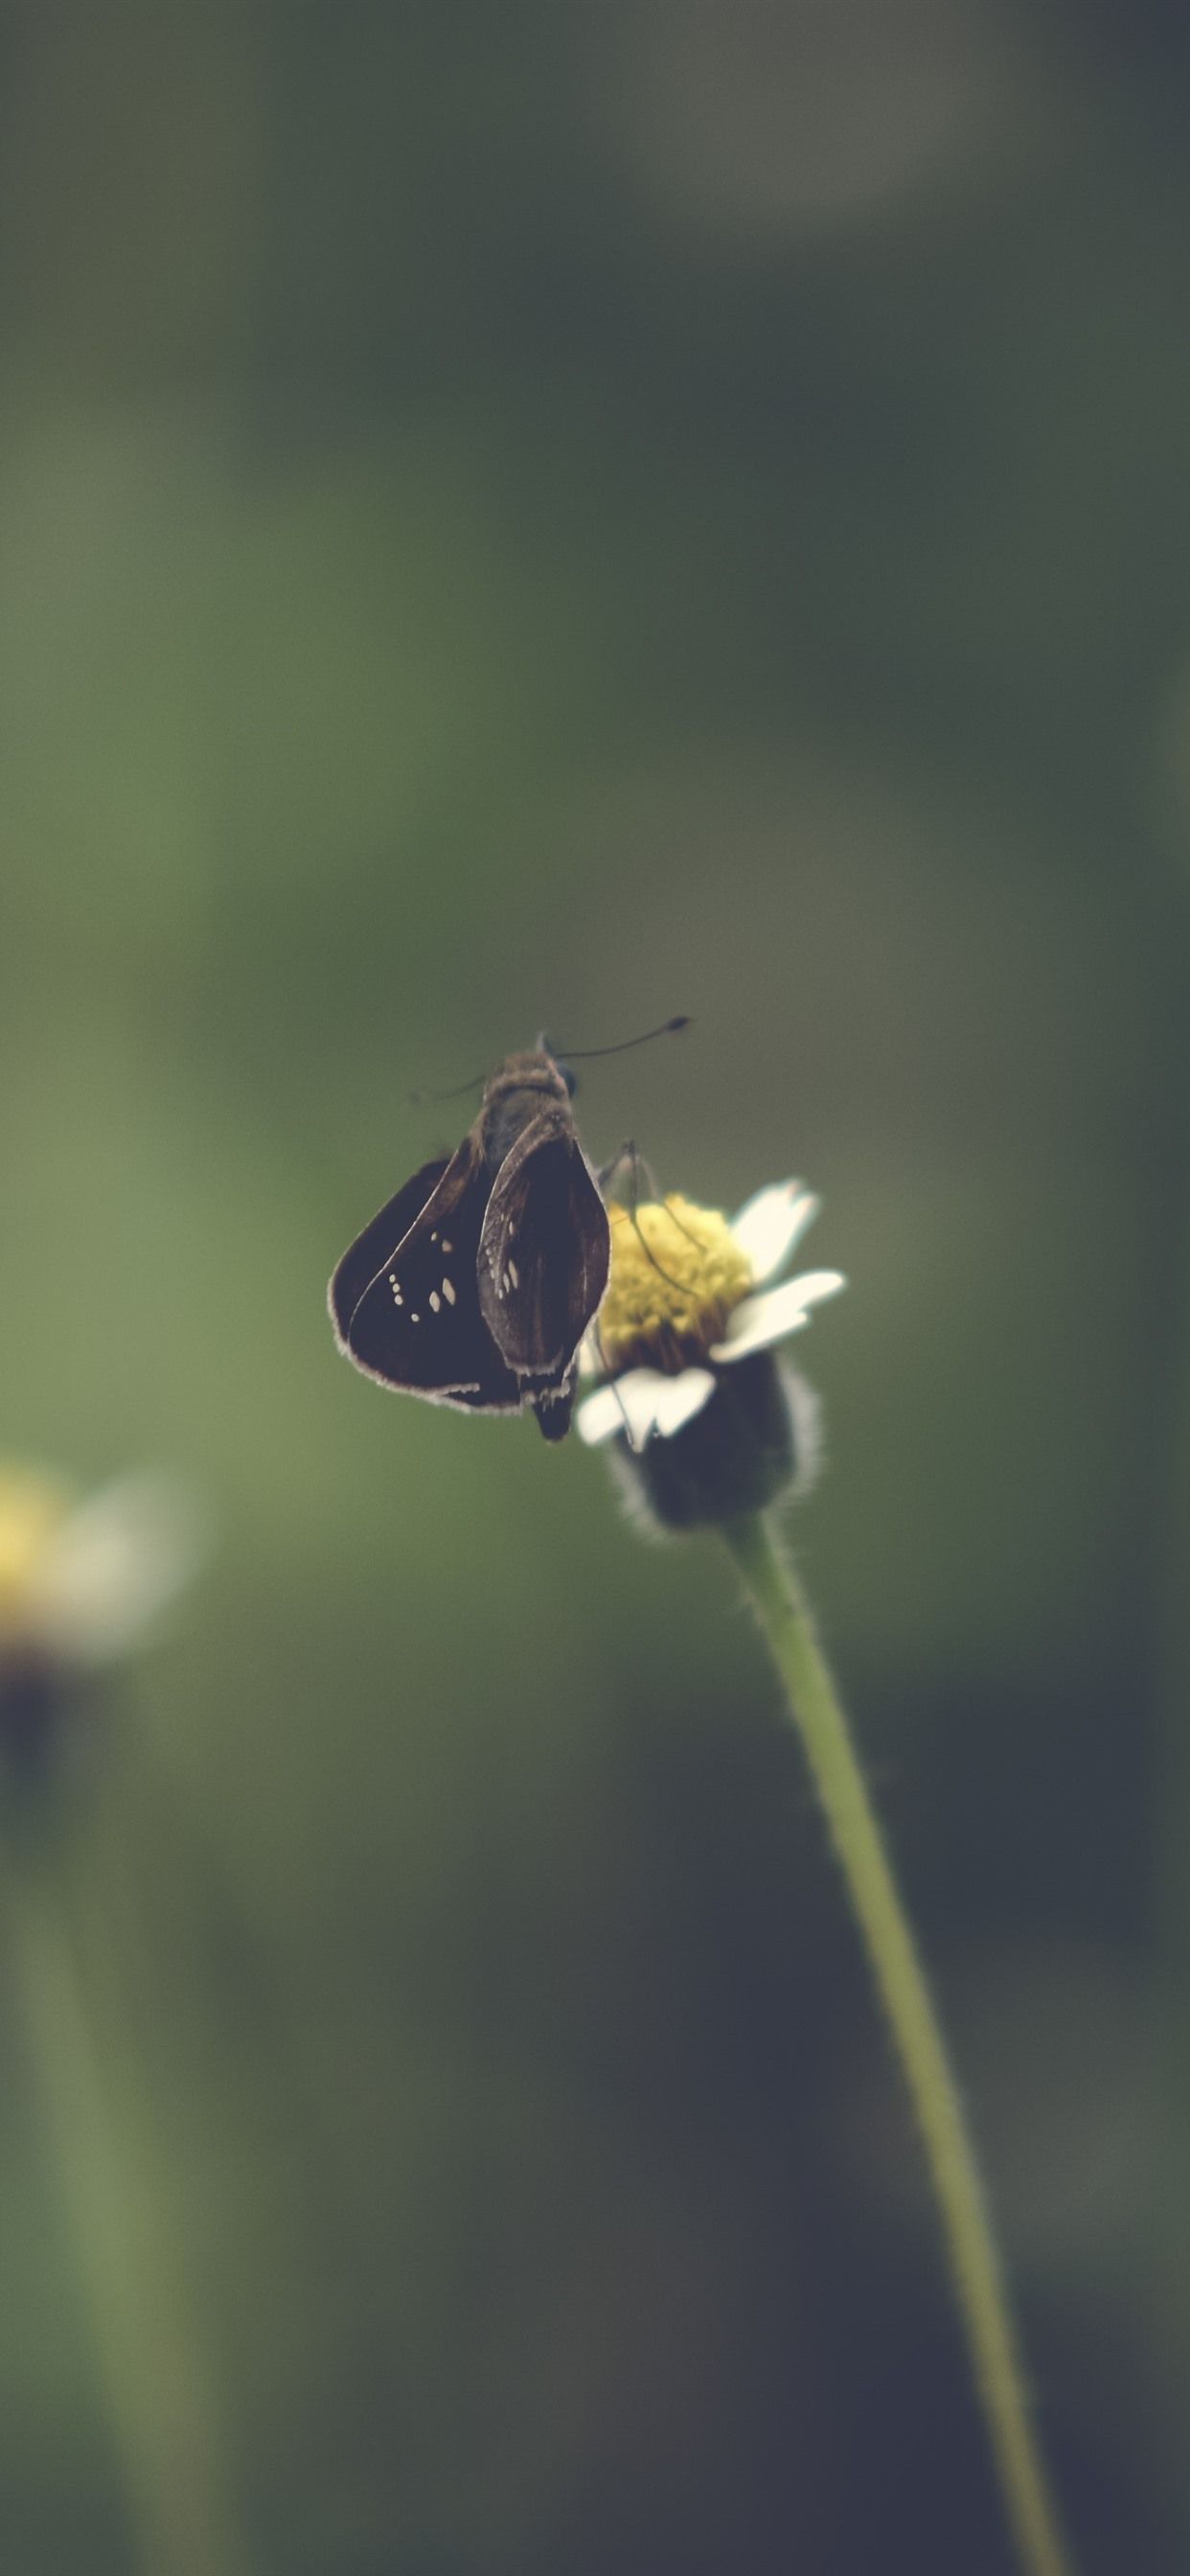 Wallpaper Black moth, flower, hazy background 3840x2160 UHD 4K Picture, Image